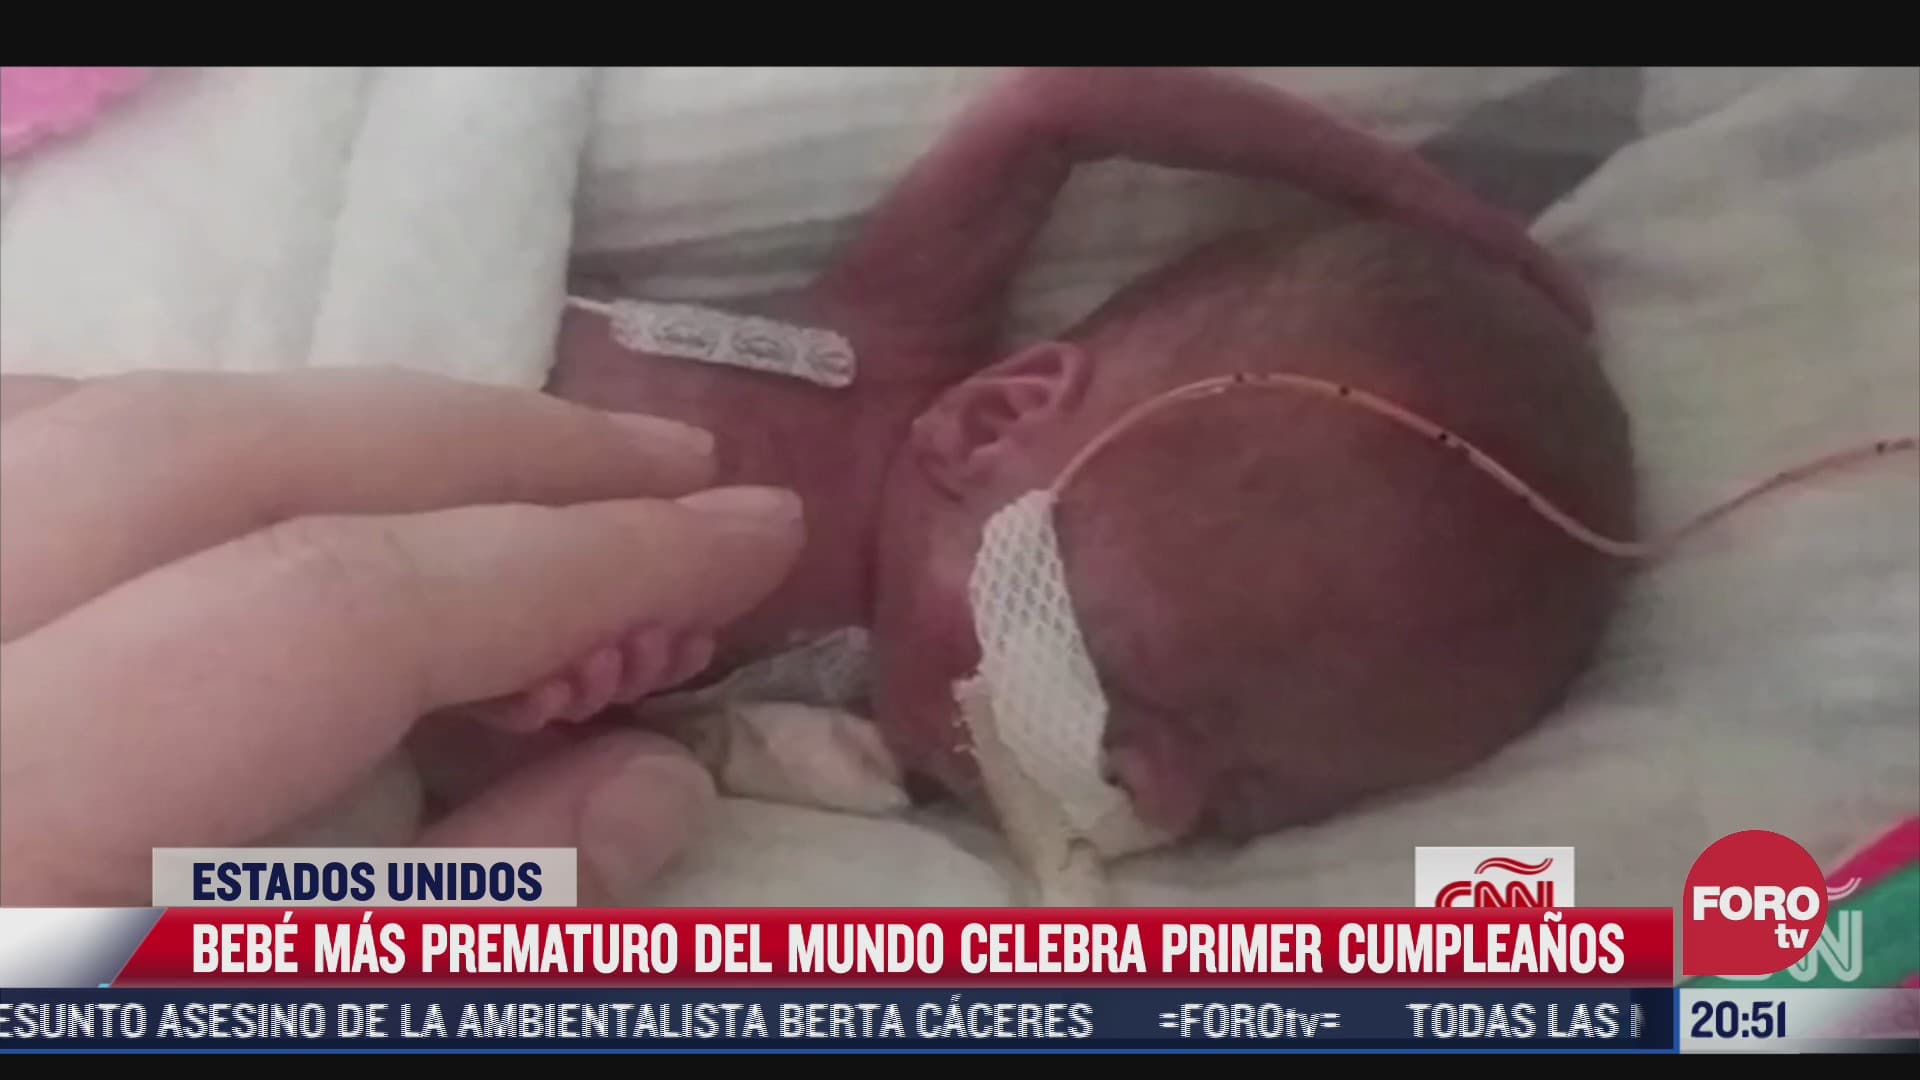 bebe mas prematuro del mundo celebra primer cumpleanos